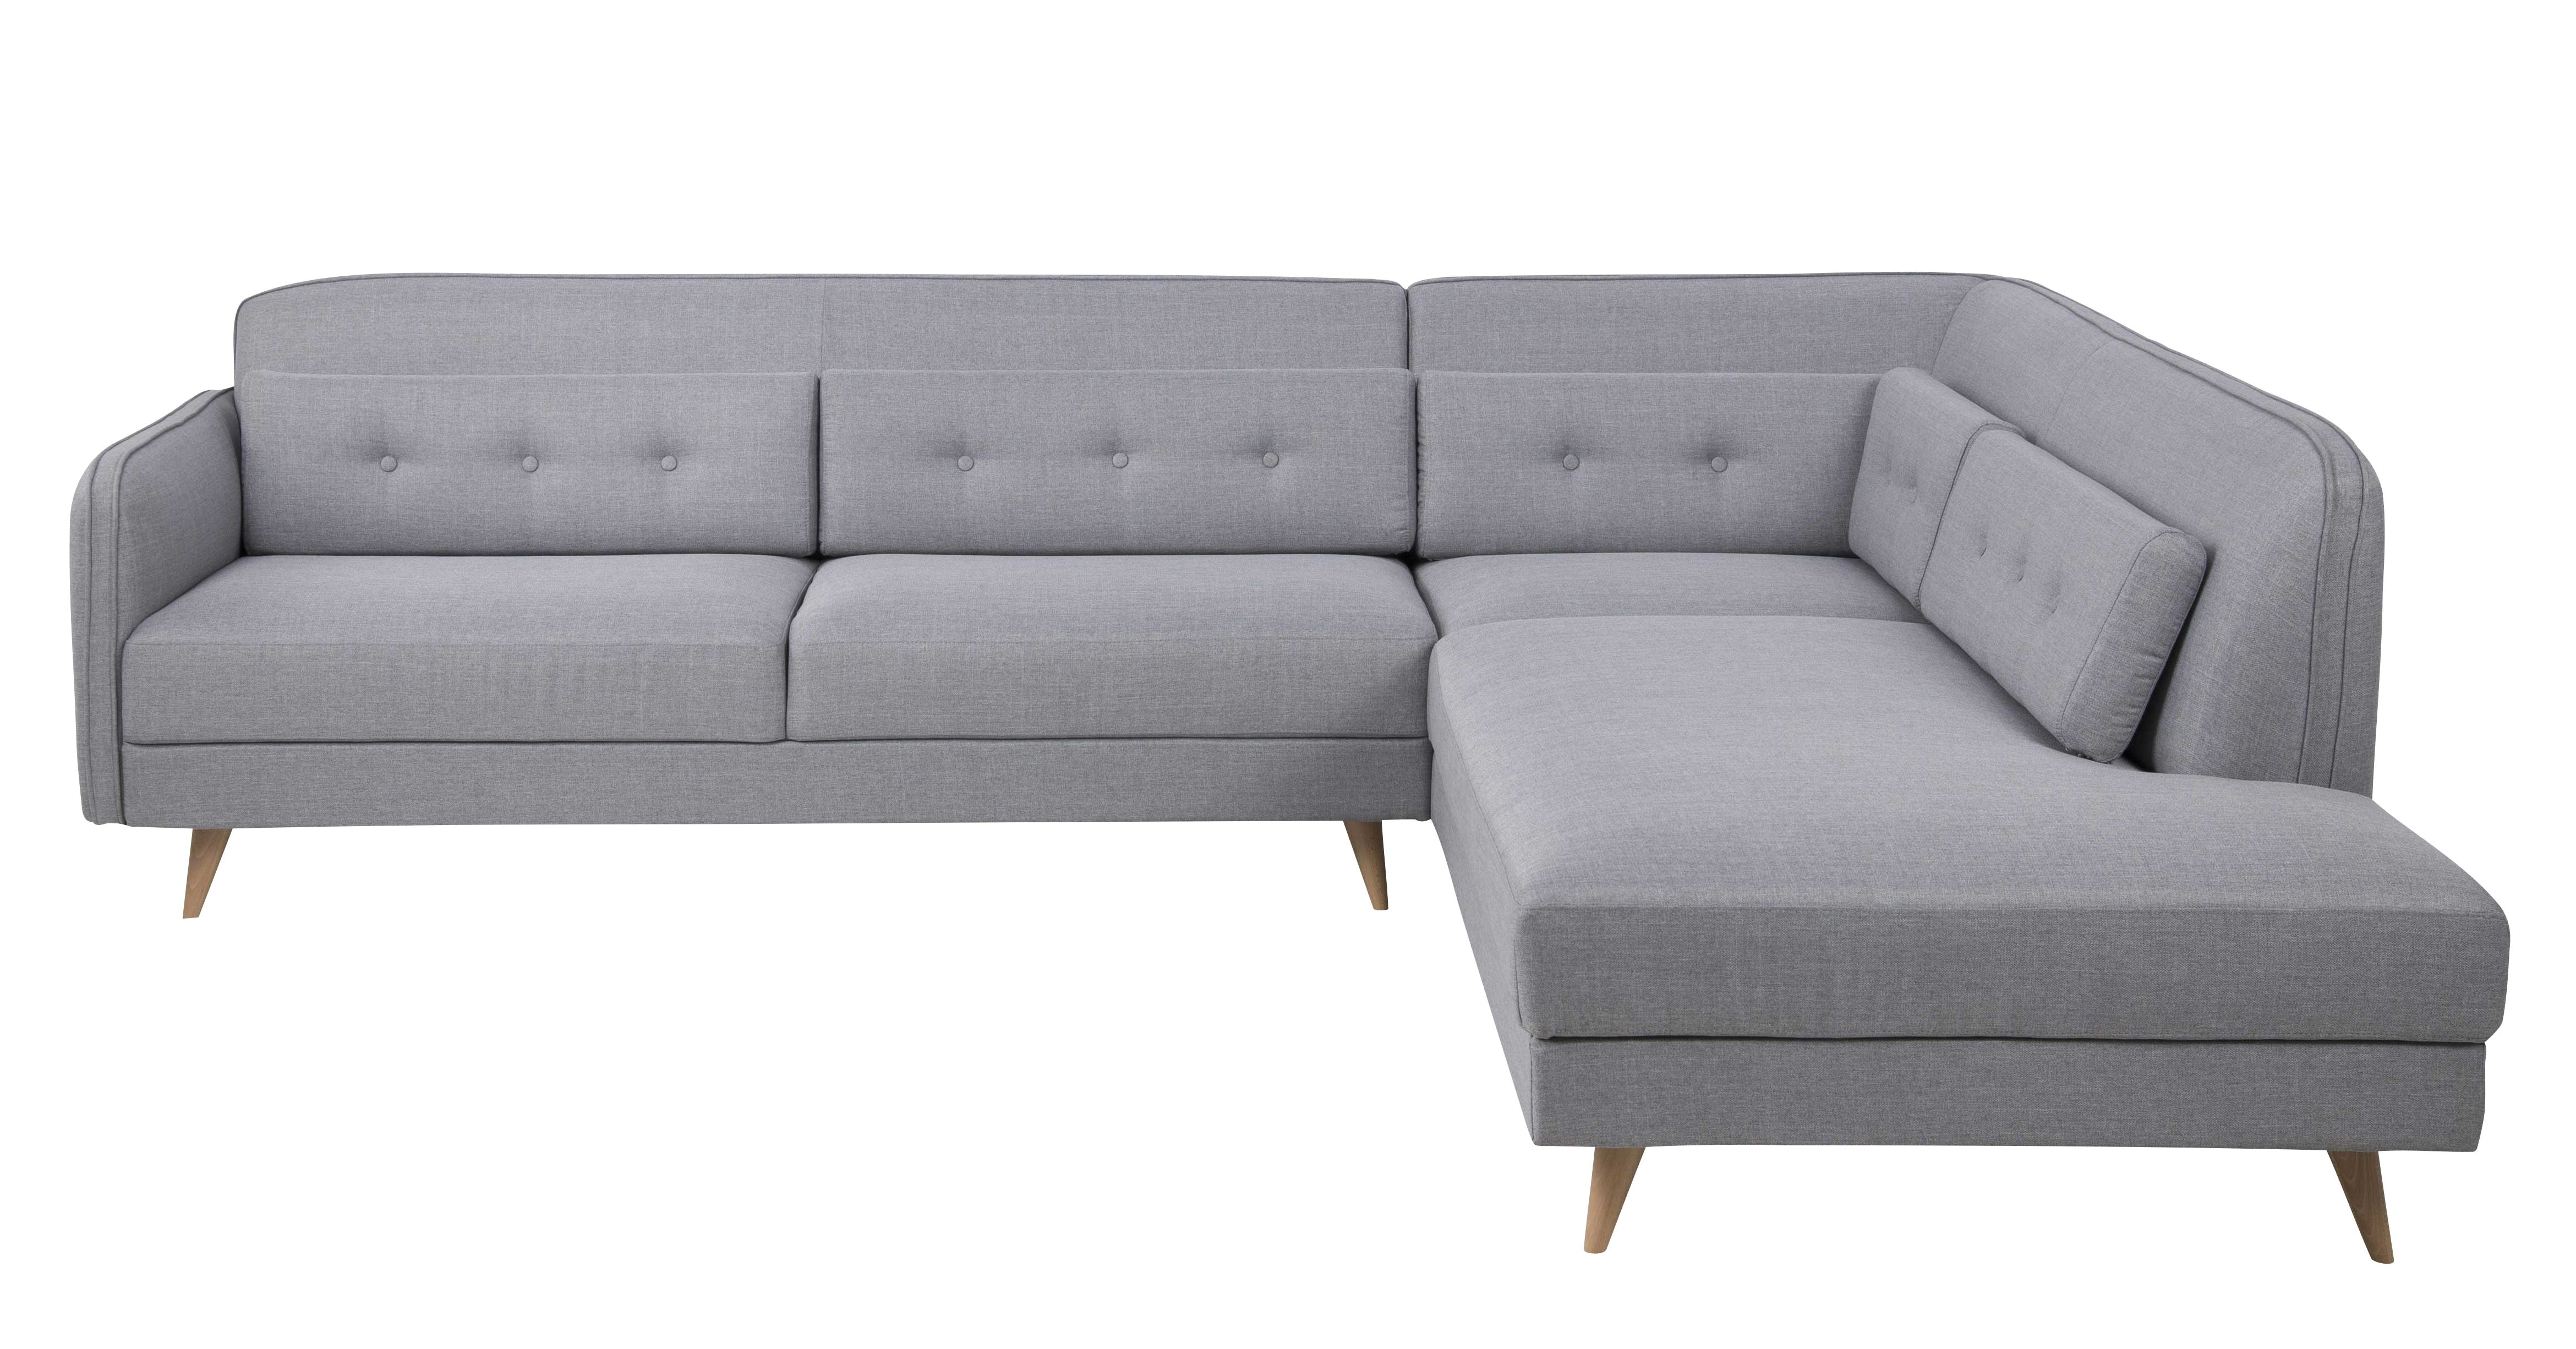 detroit sofa company reviews new iddesign modern home furniture store in dubai abu dhabi